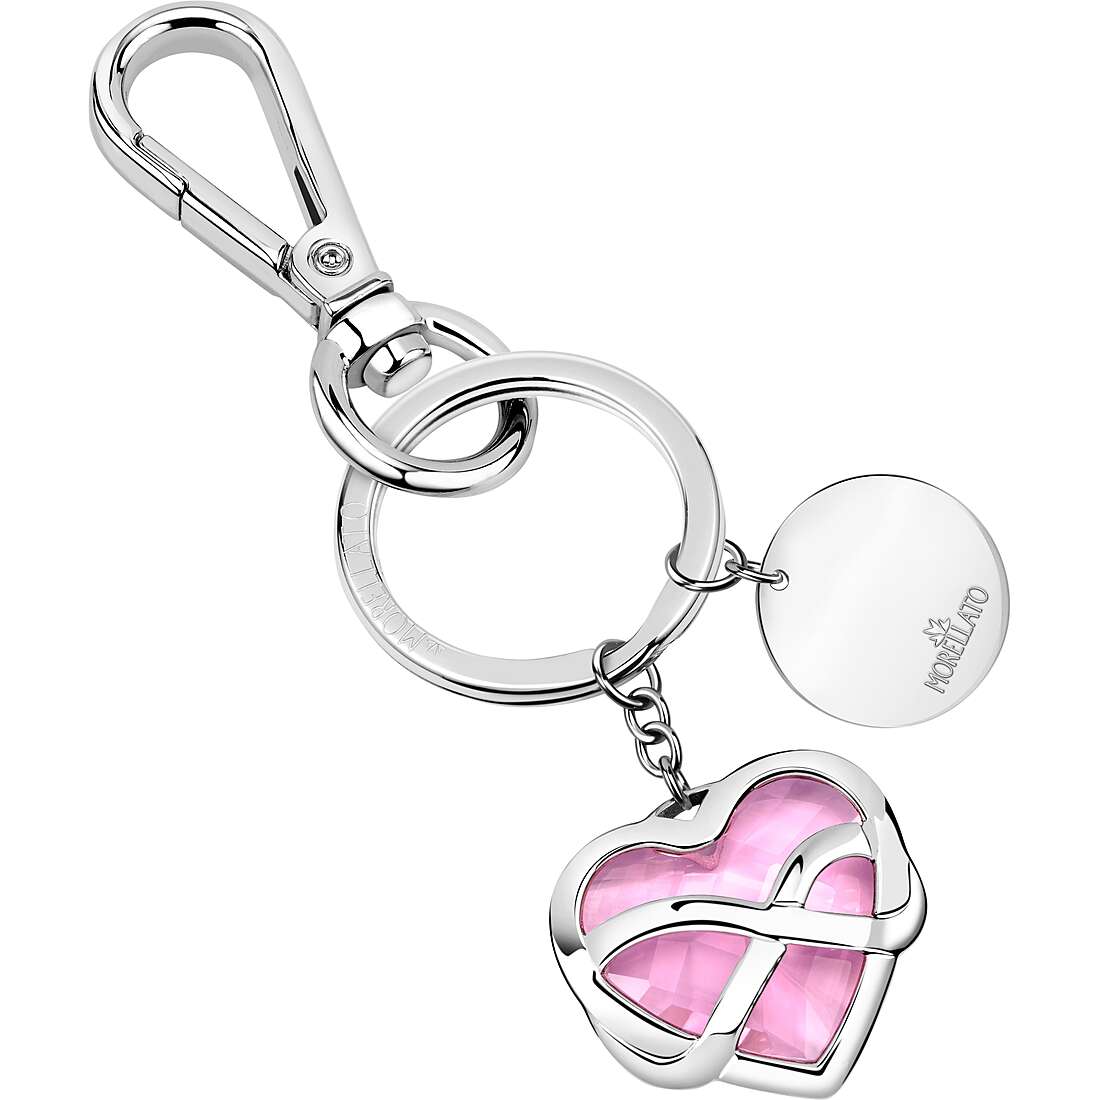 jewel Morellato key-rings with Heart SD7162